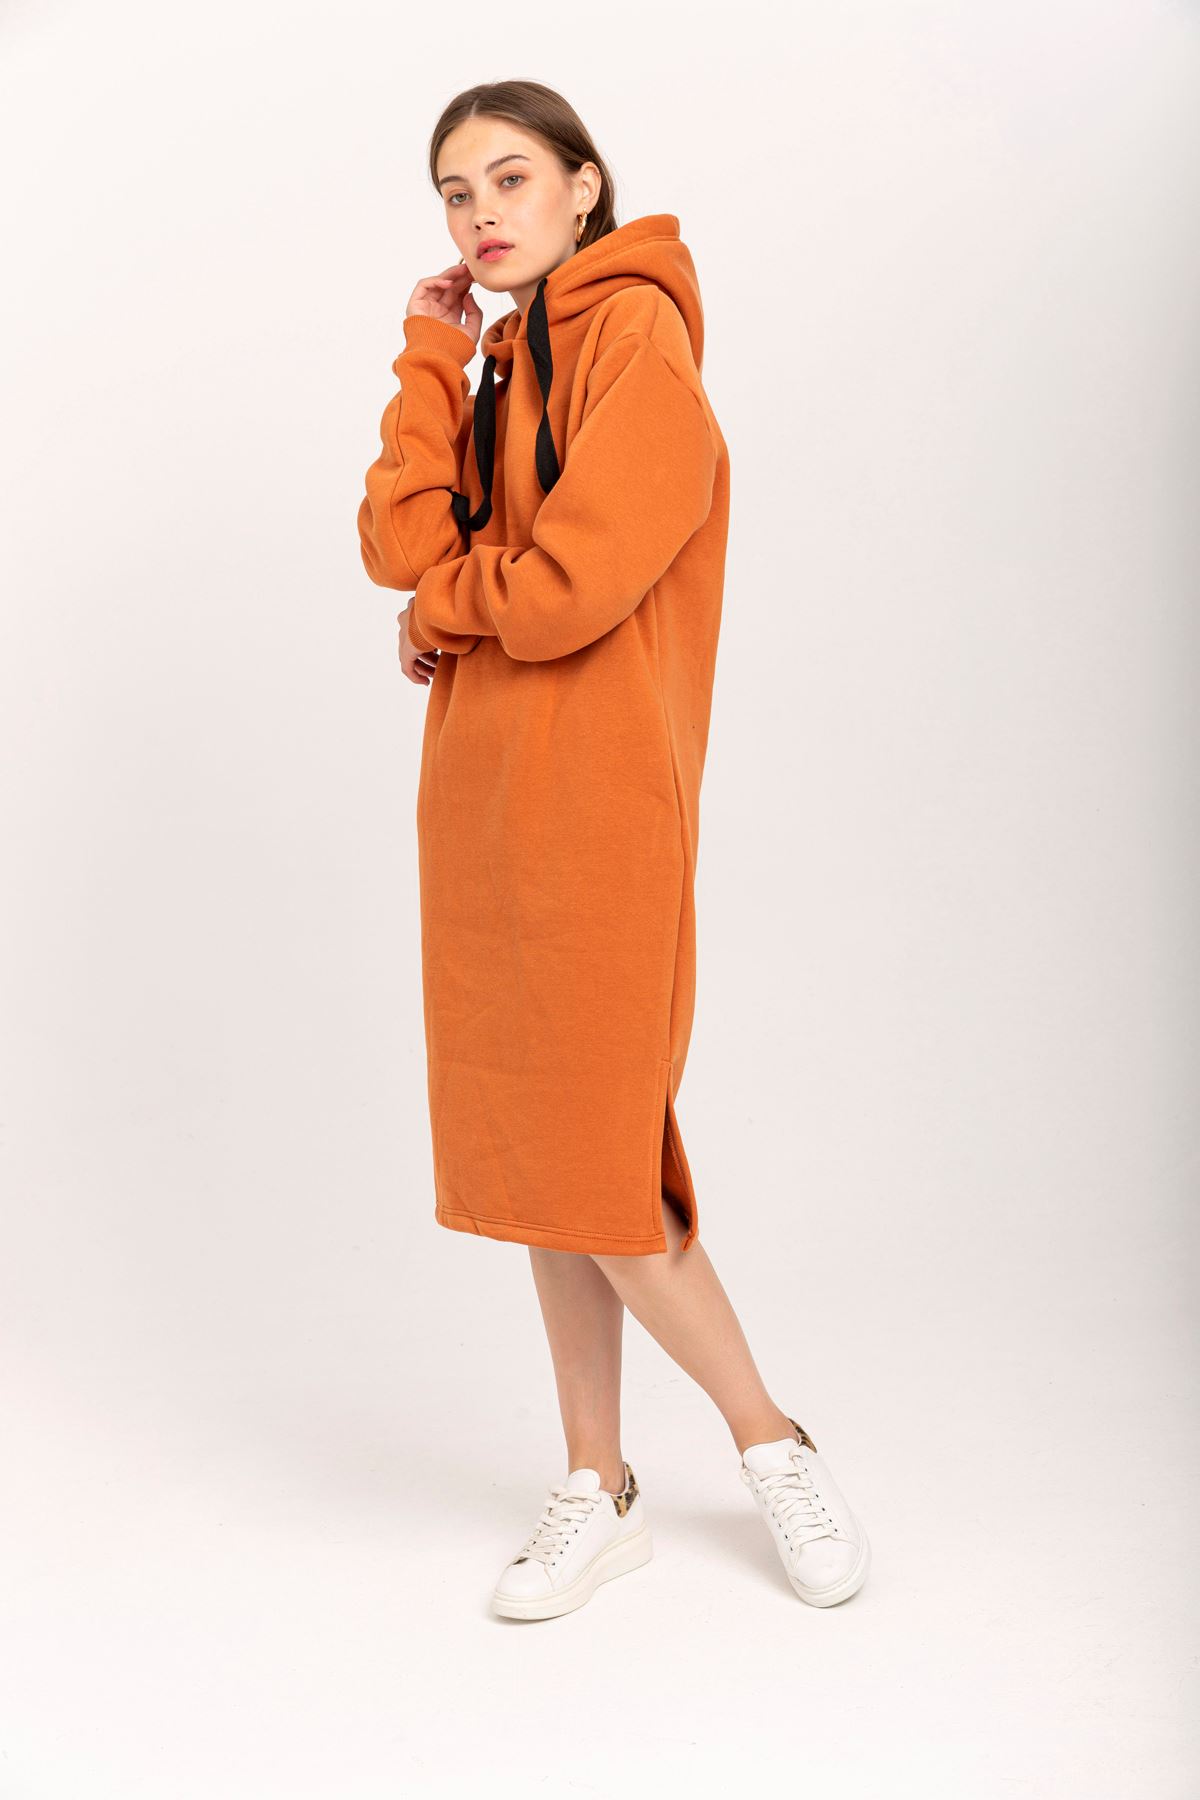 Third Knit With Wool İnside Fabric Long Sleeve Hooded Oversize Women Dress - Cinnamon 